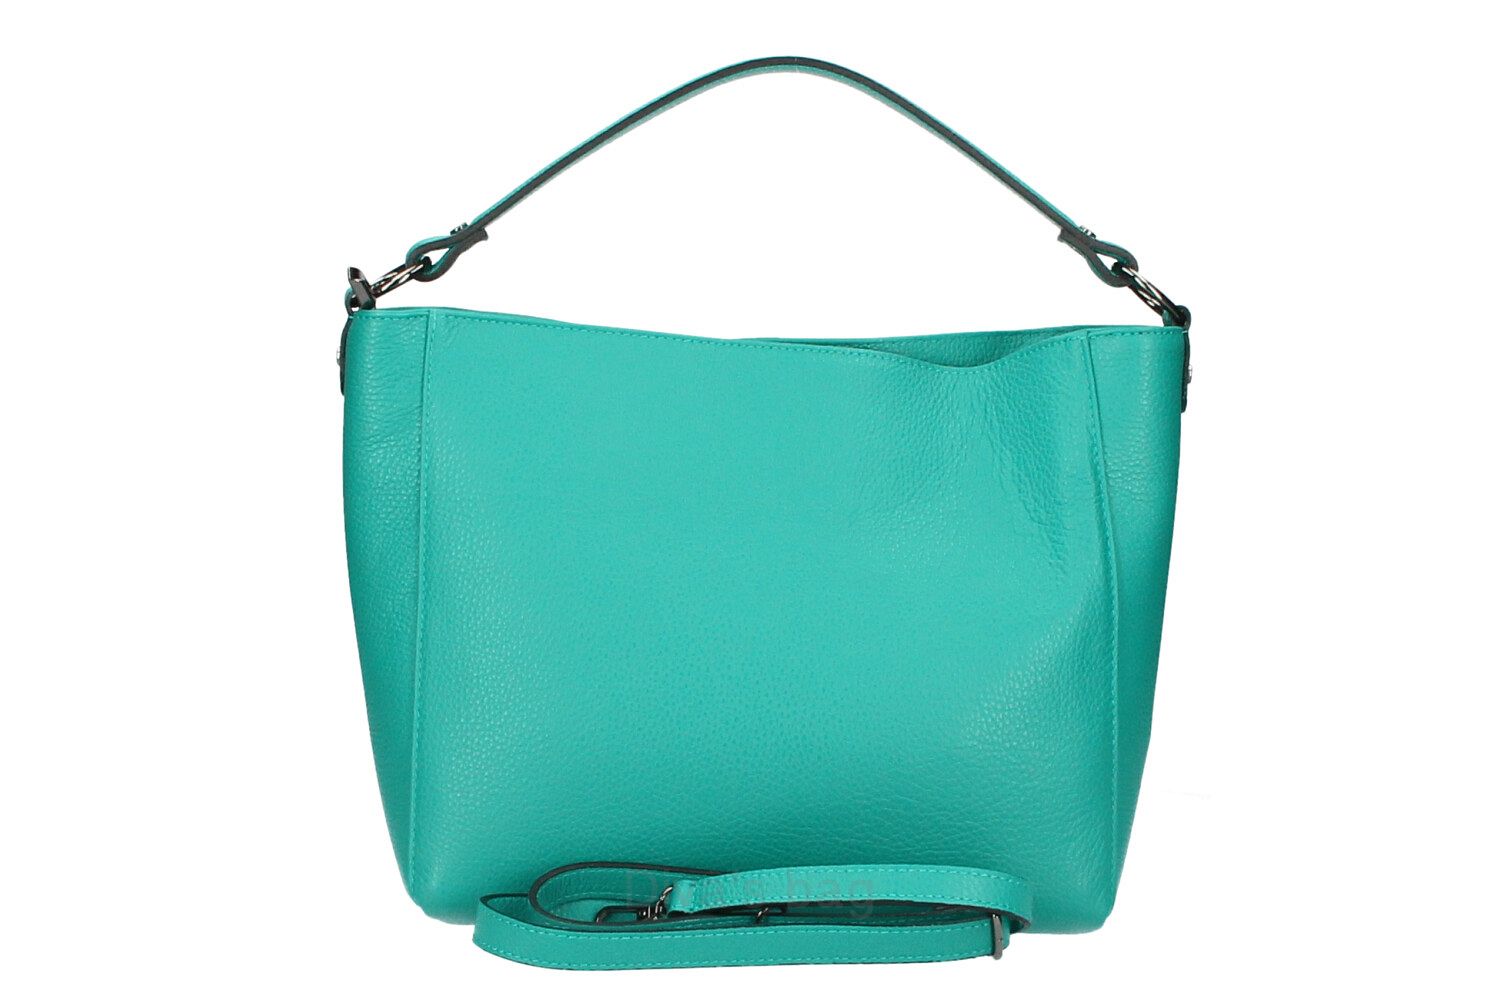 Brunella - Leather handbag